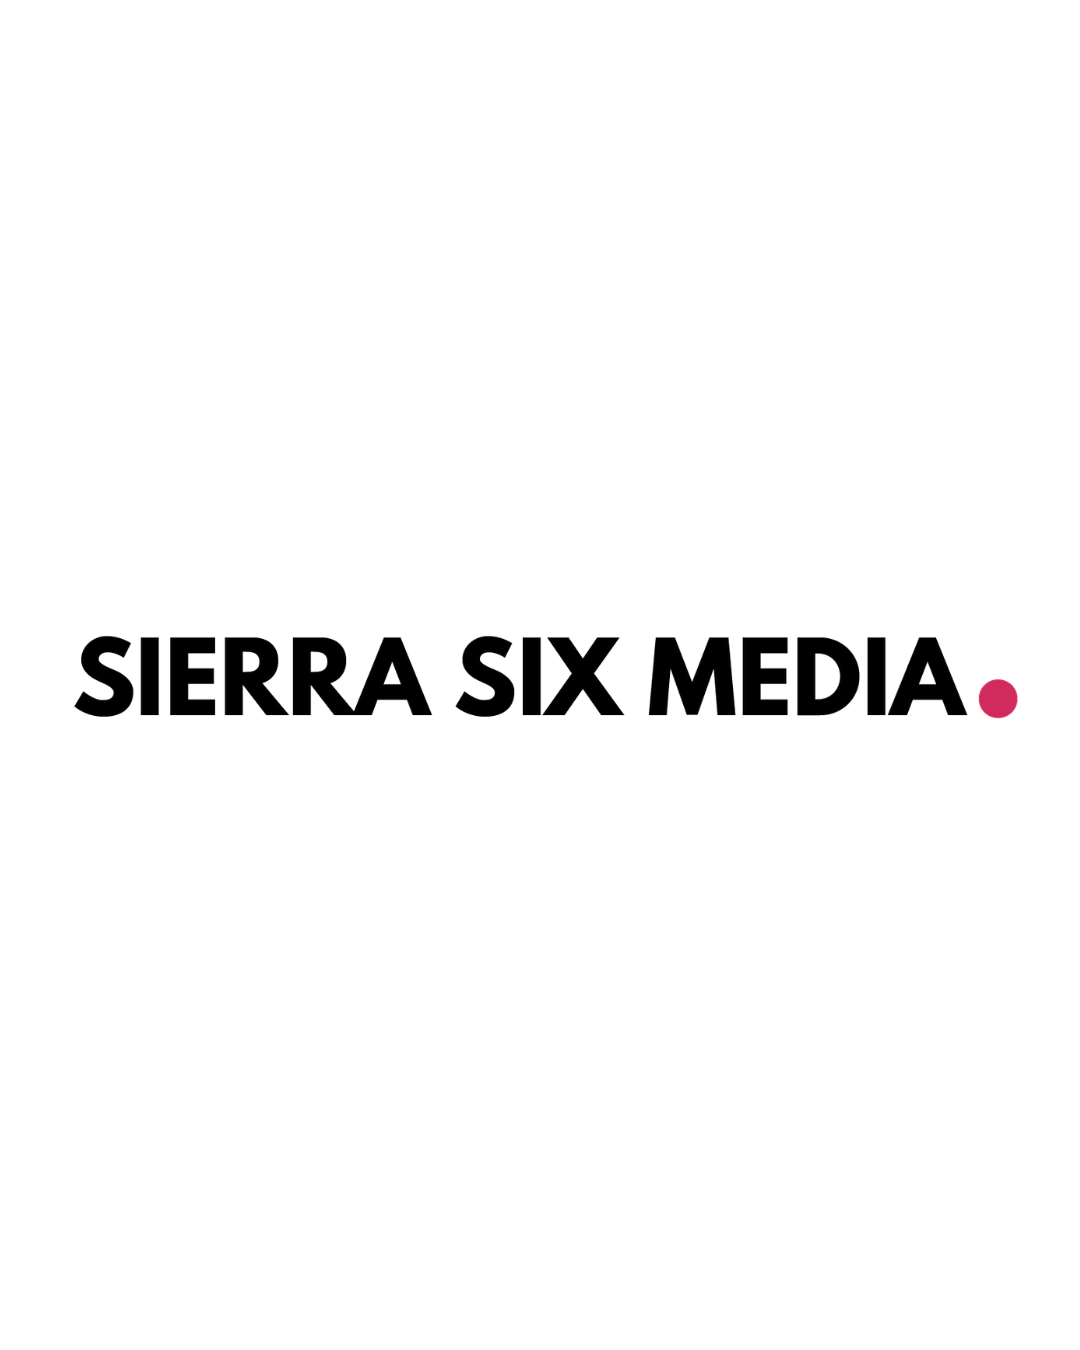 Sierra Six Media